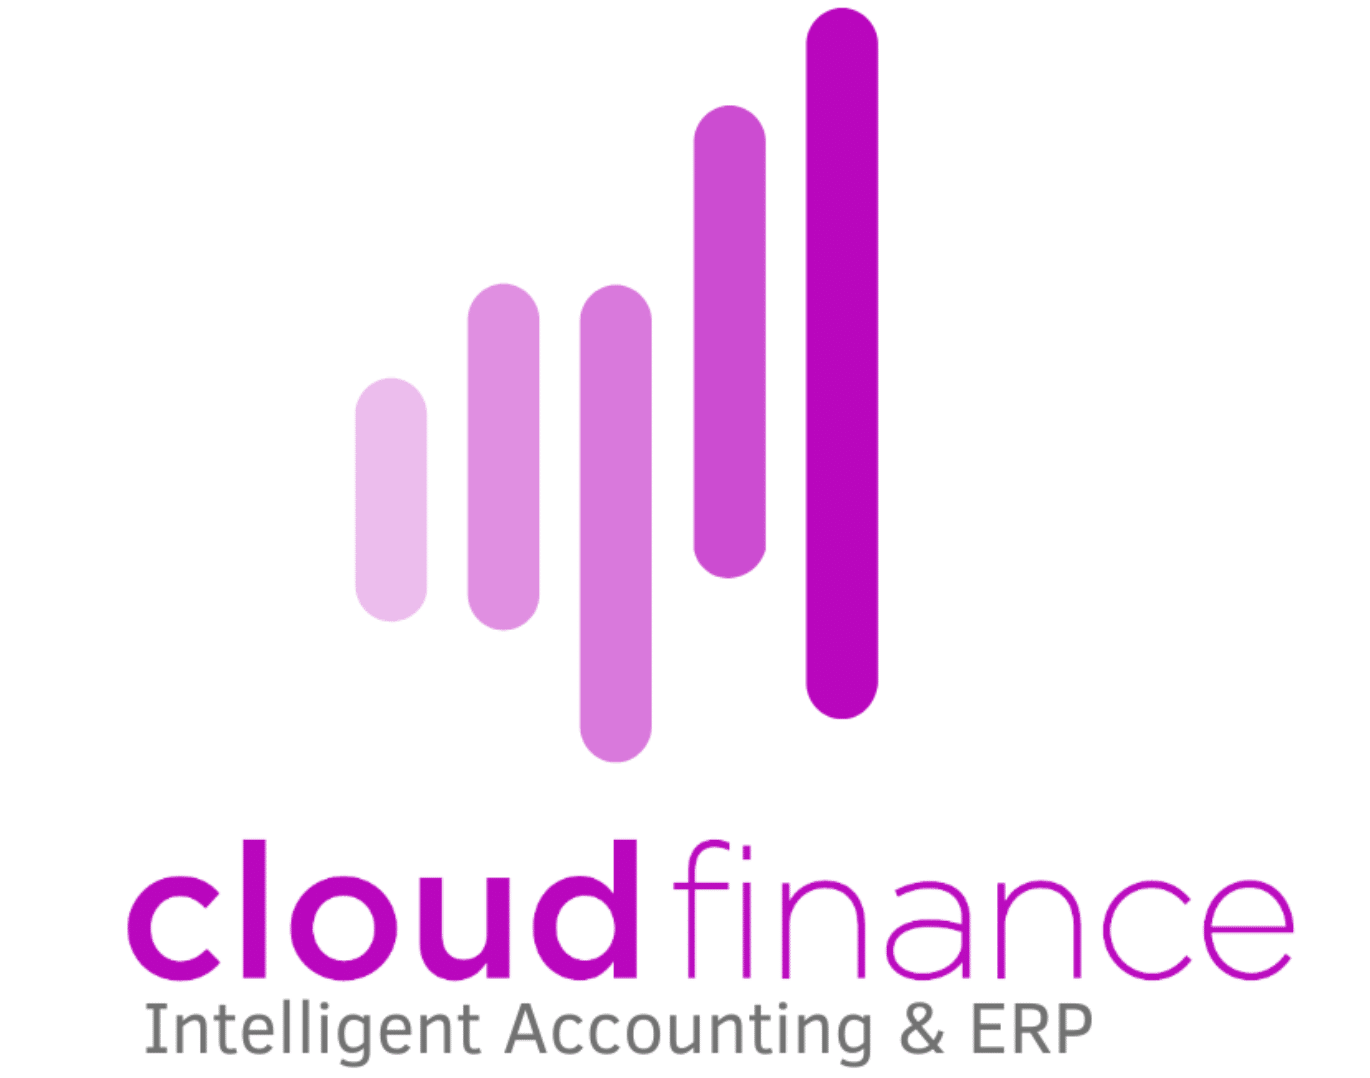 Intelligent Accounting & ERP